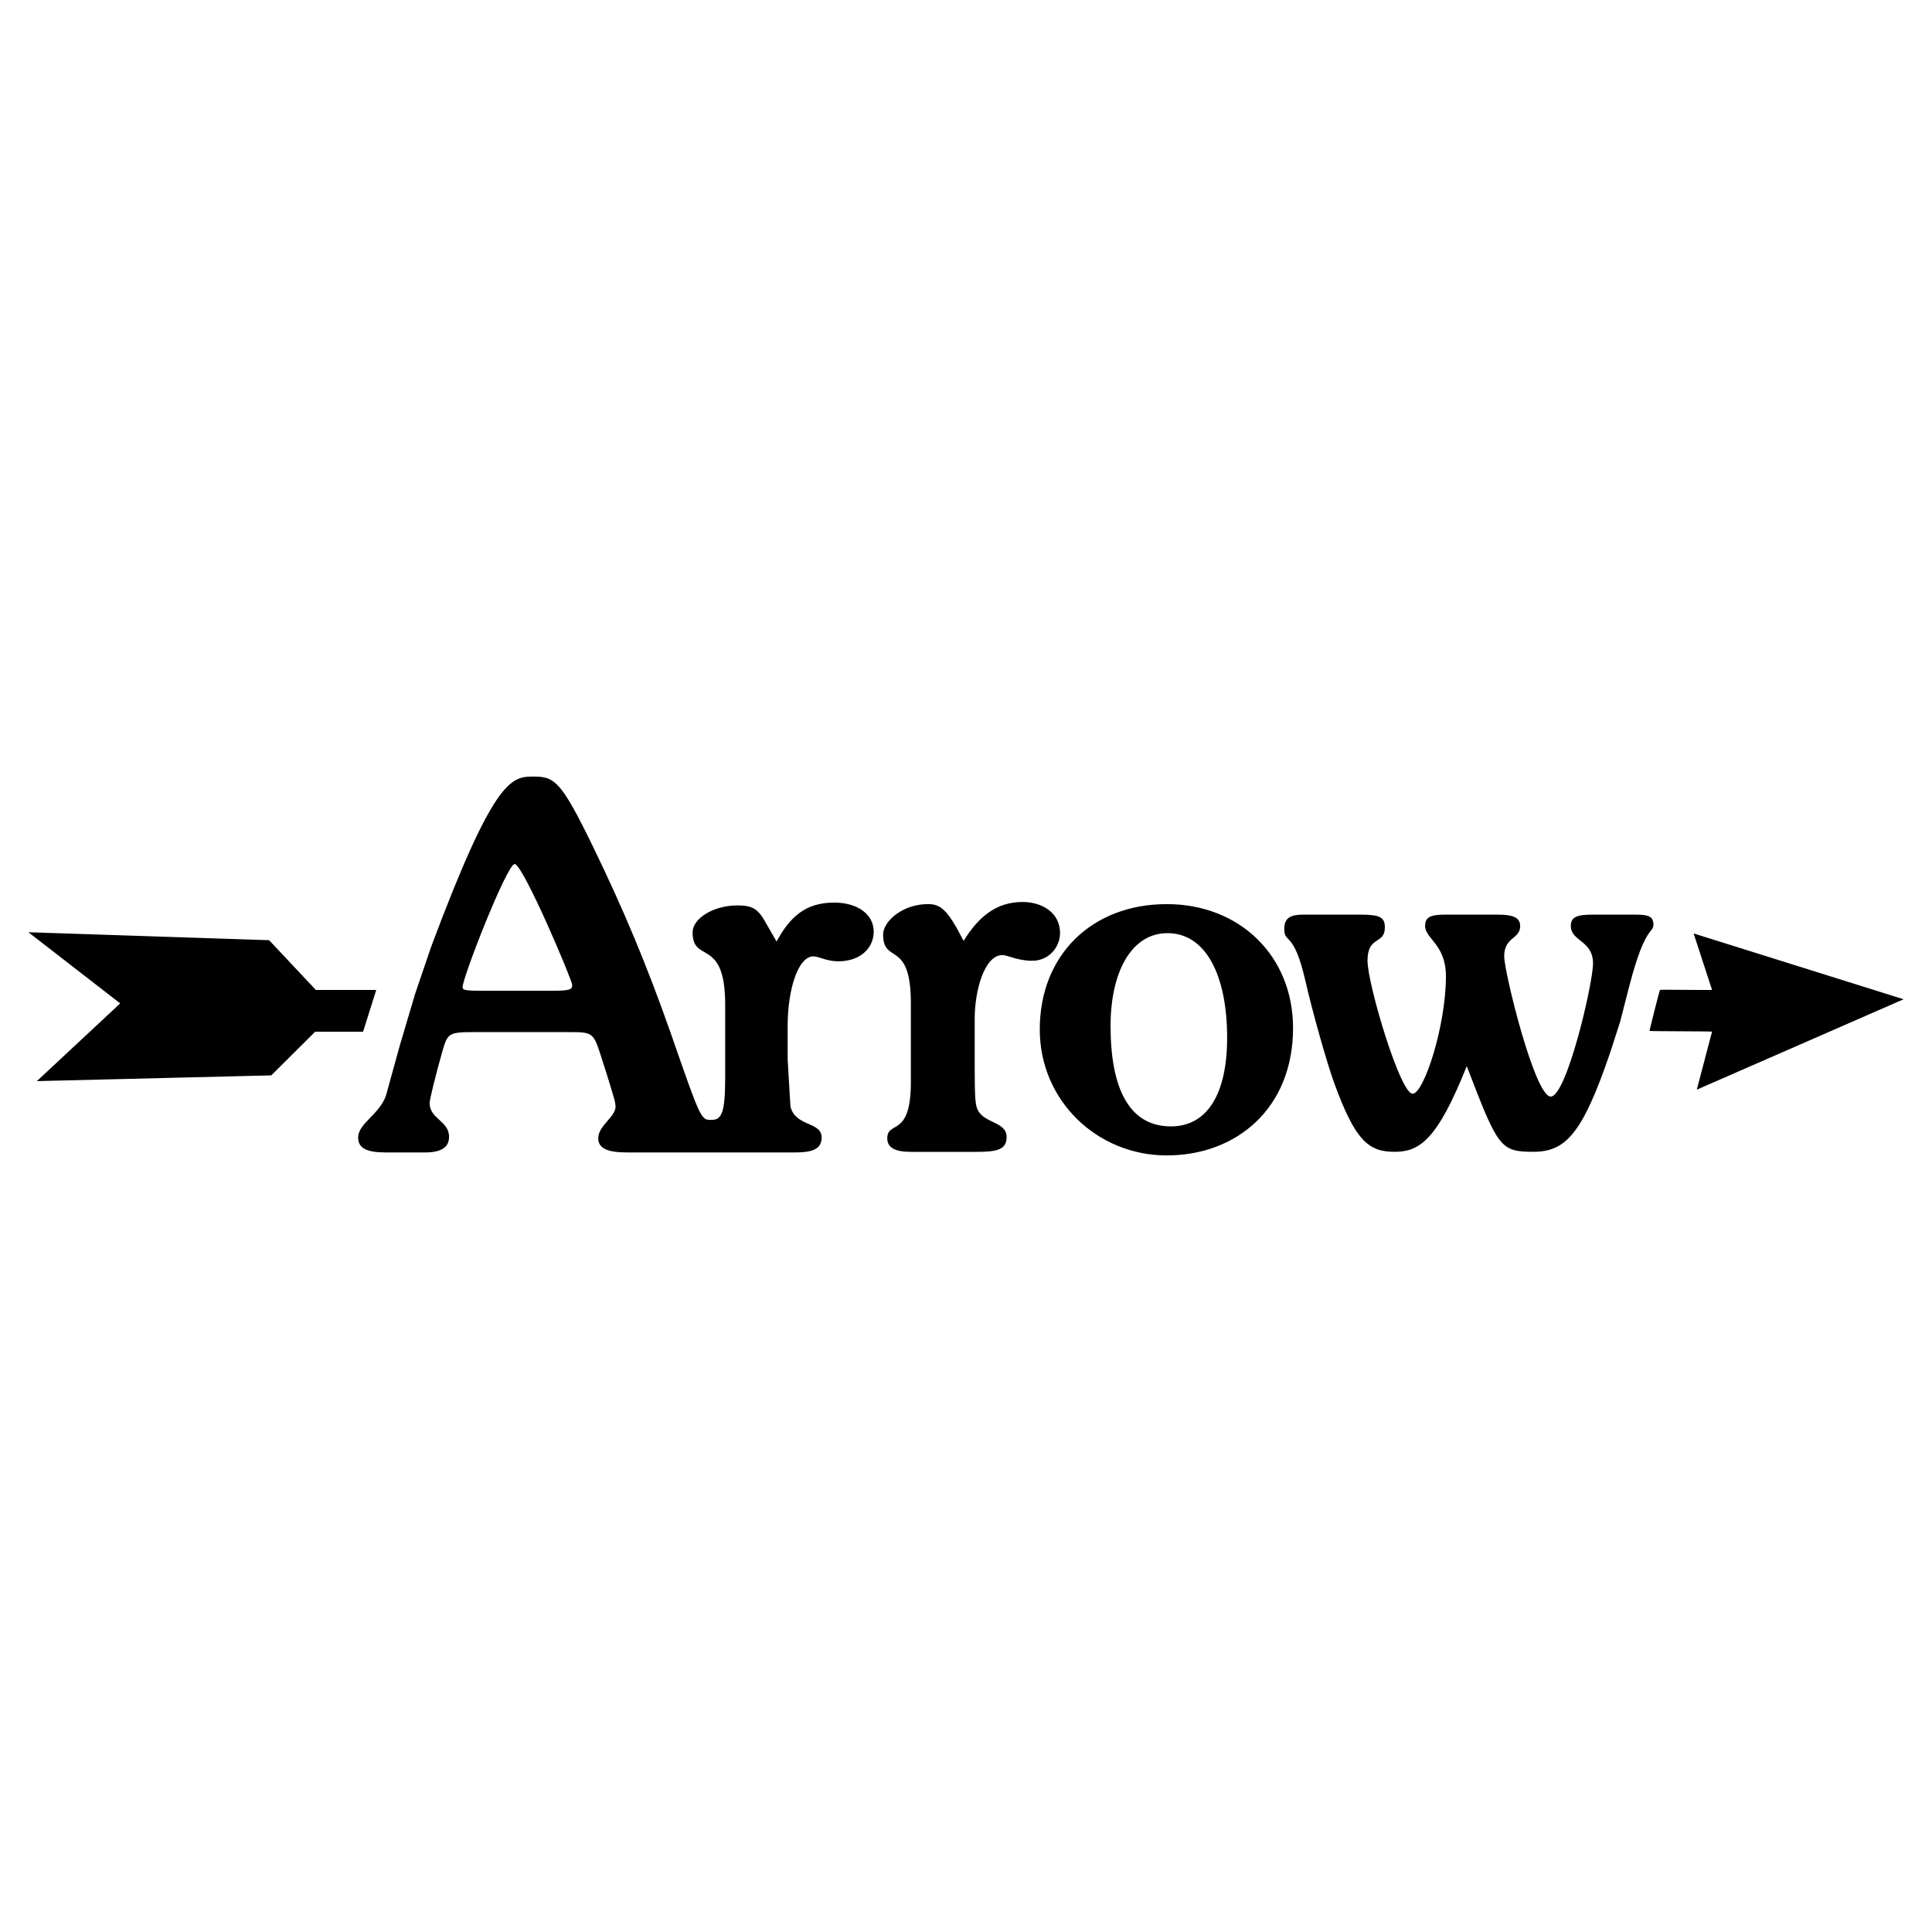 Arrow – DCTV logo colors